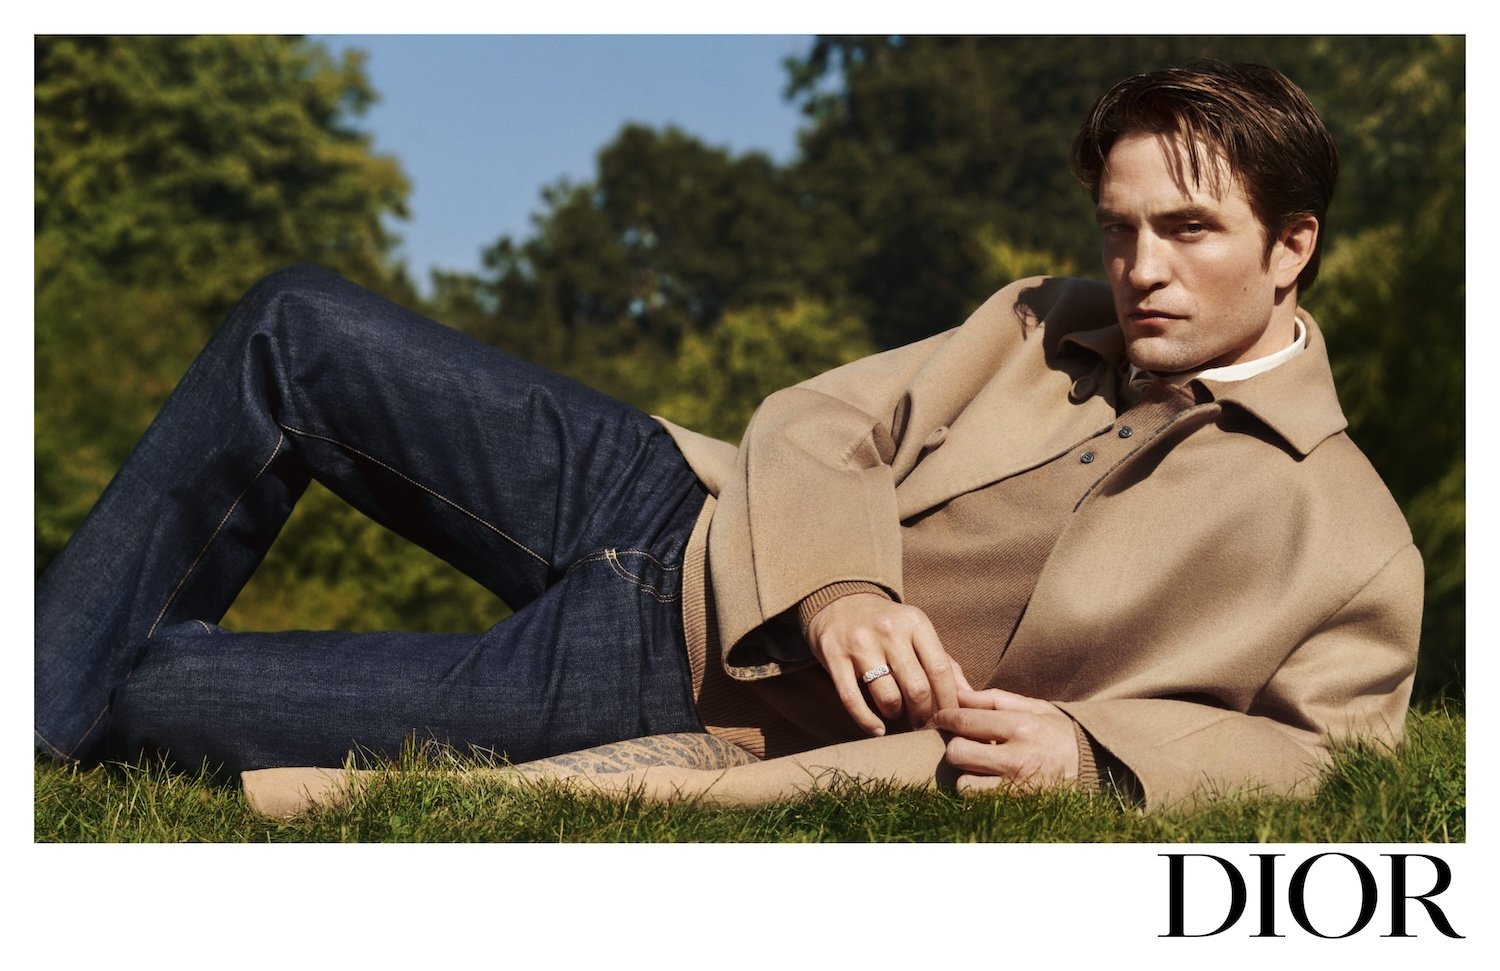 Dior-Men-Icons-Robert-Pattinson-by-Alasdair-McLellan-1.jpg